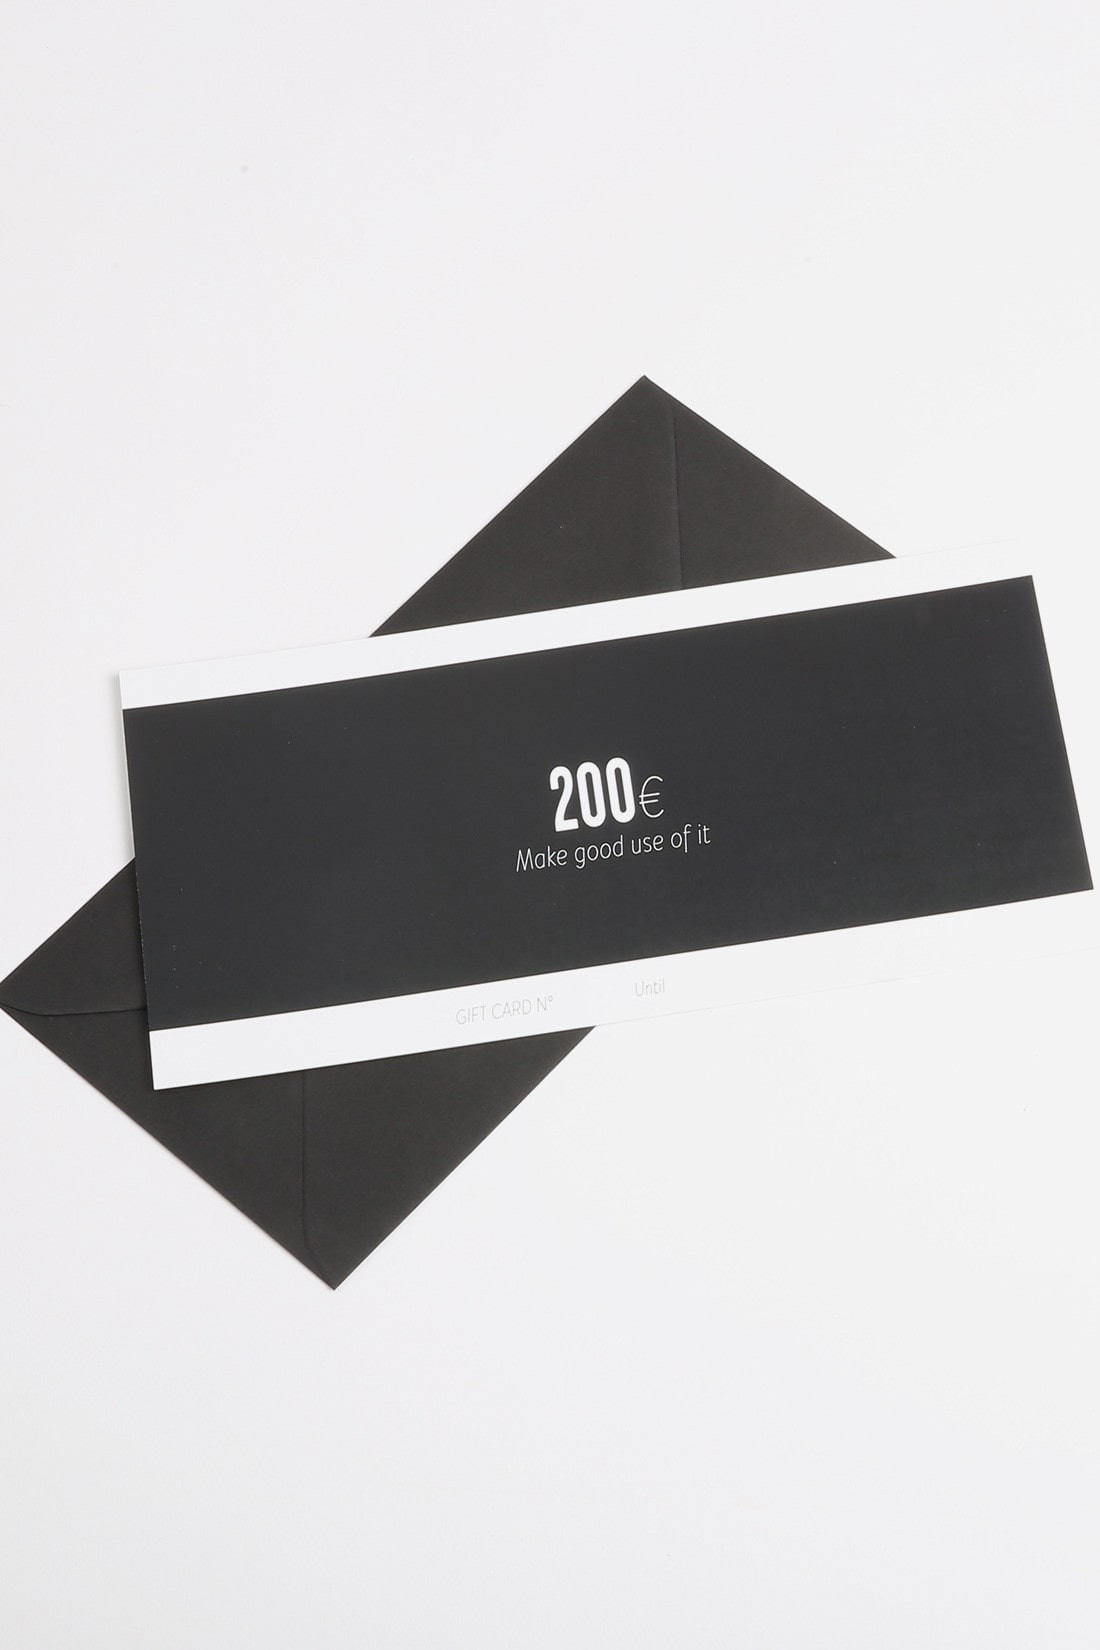 Gift card 200€